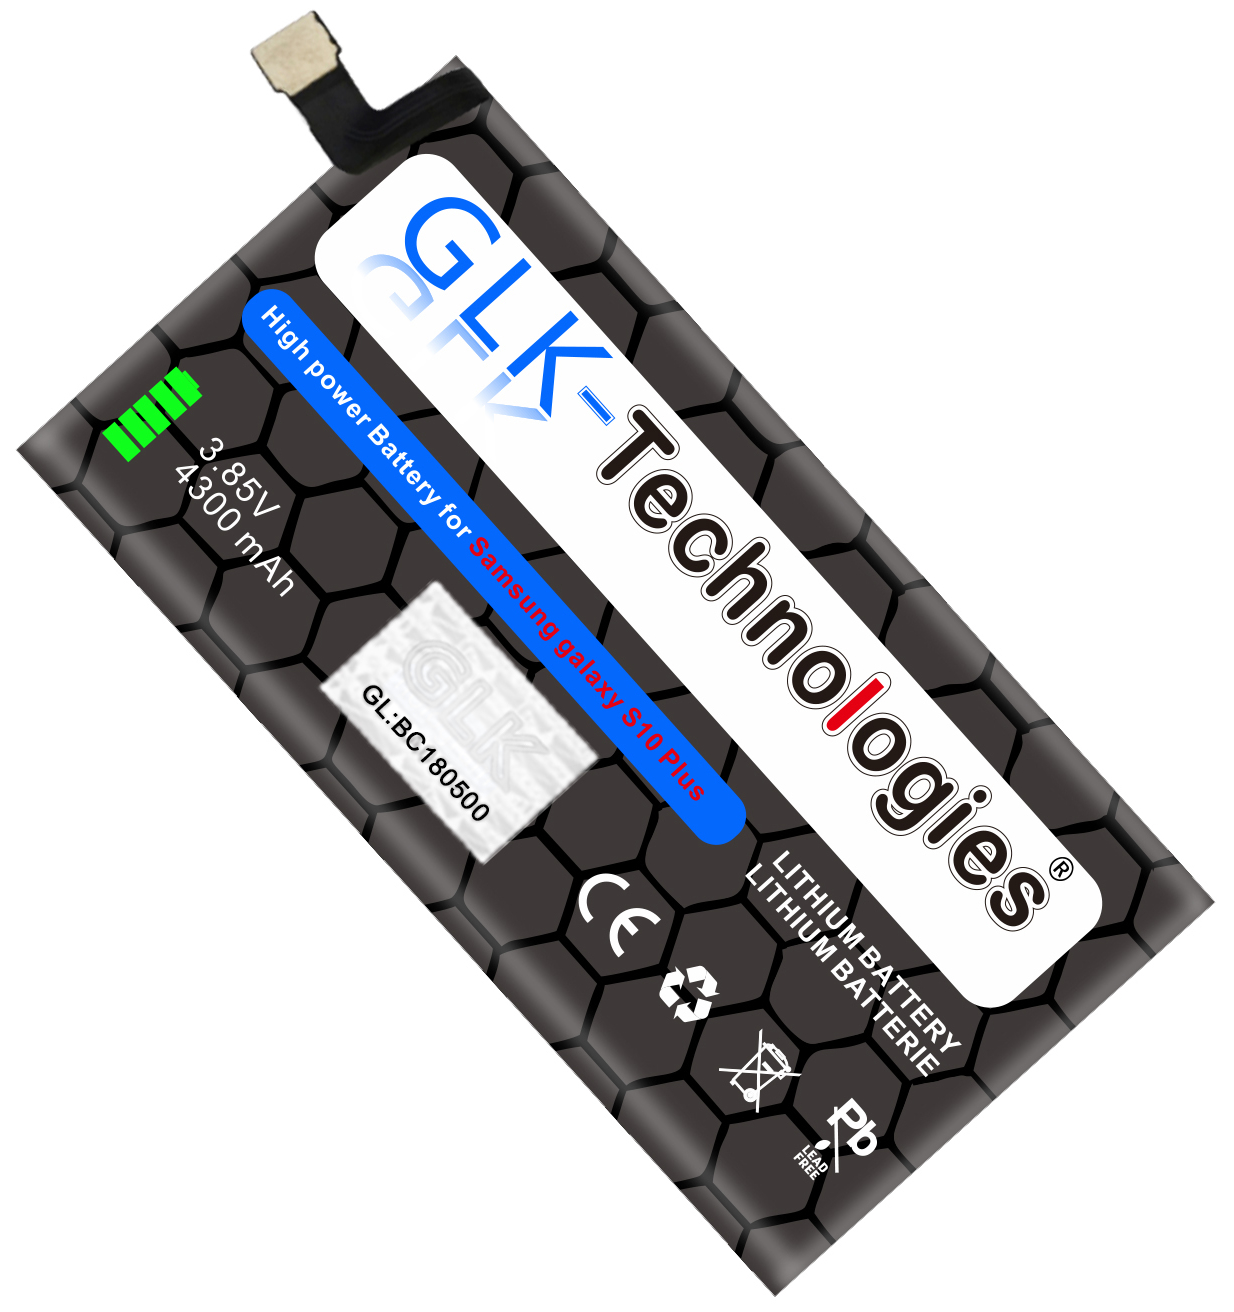 GLK-TECHNOLOGIES Ersatz Akku für Samsung 3.85 G975 mAh Akku, Plus Volt, S10 Smartphone Galaxy 4300 GLK-S10E mAh S10+ Li-Ion, EB-BG975ABU Ersatz 4300